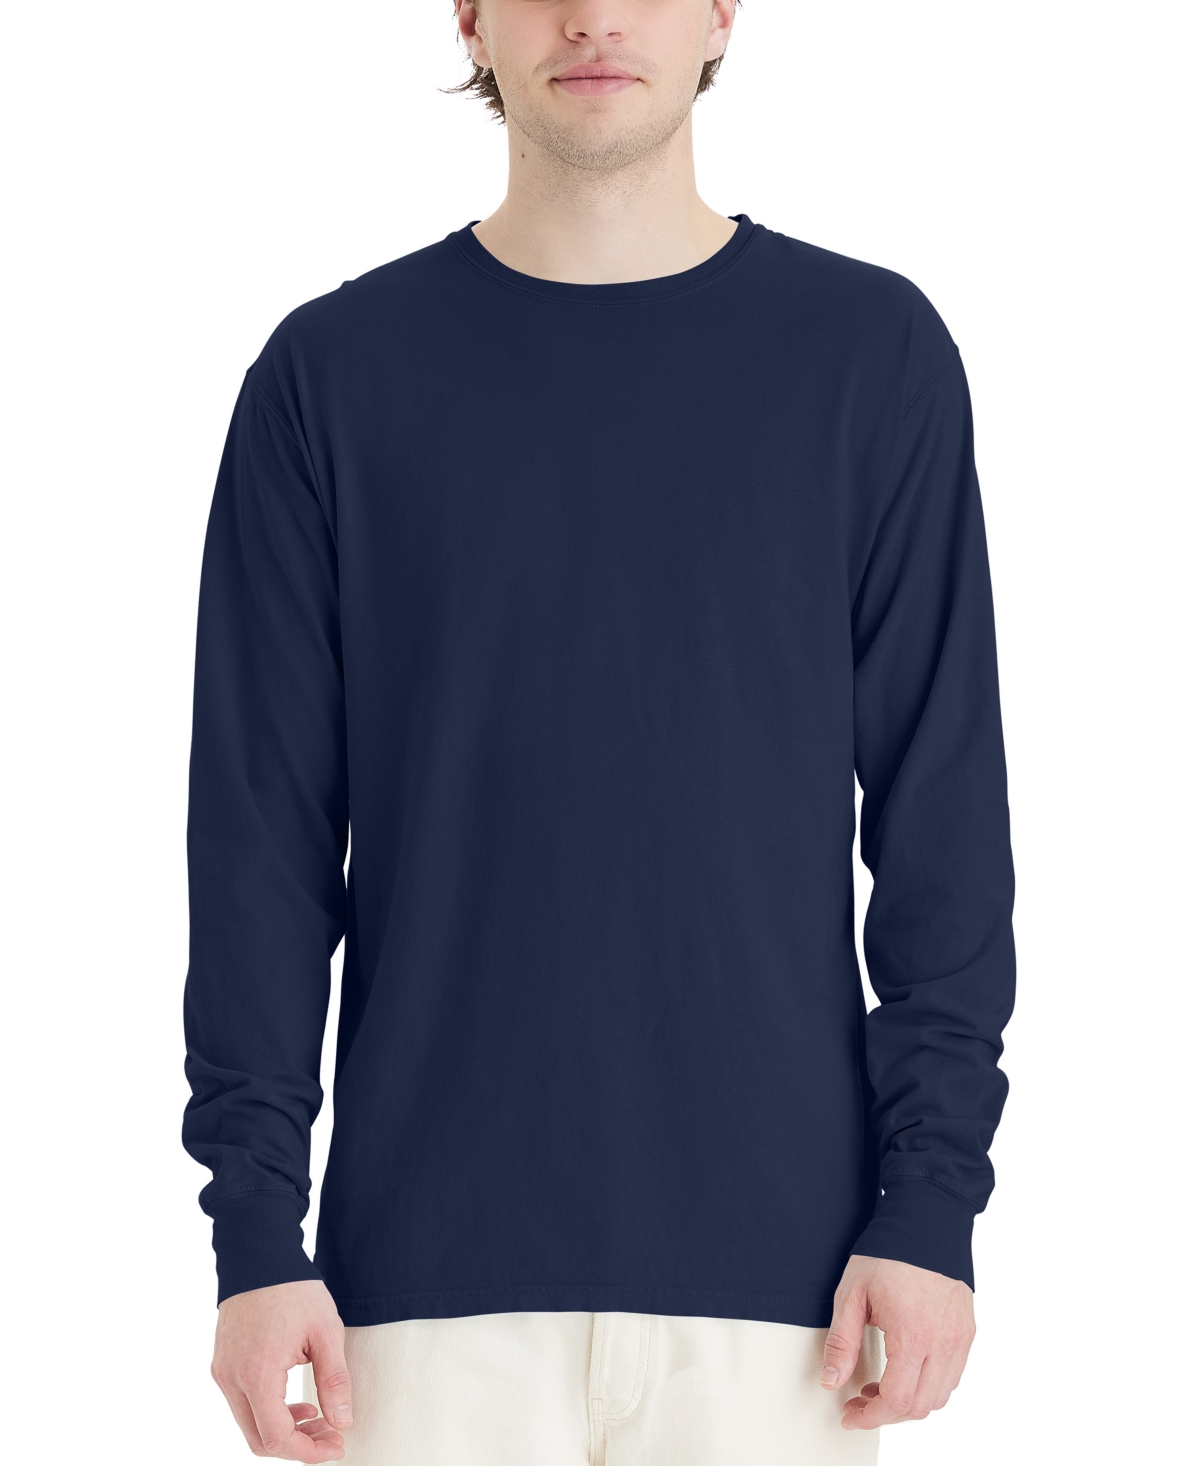 Unisex Garment Dyed Long Sleeve Cotton T-Shirt - Blue